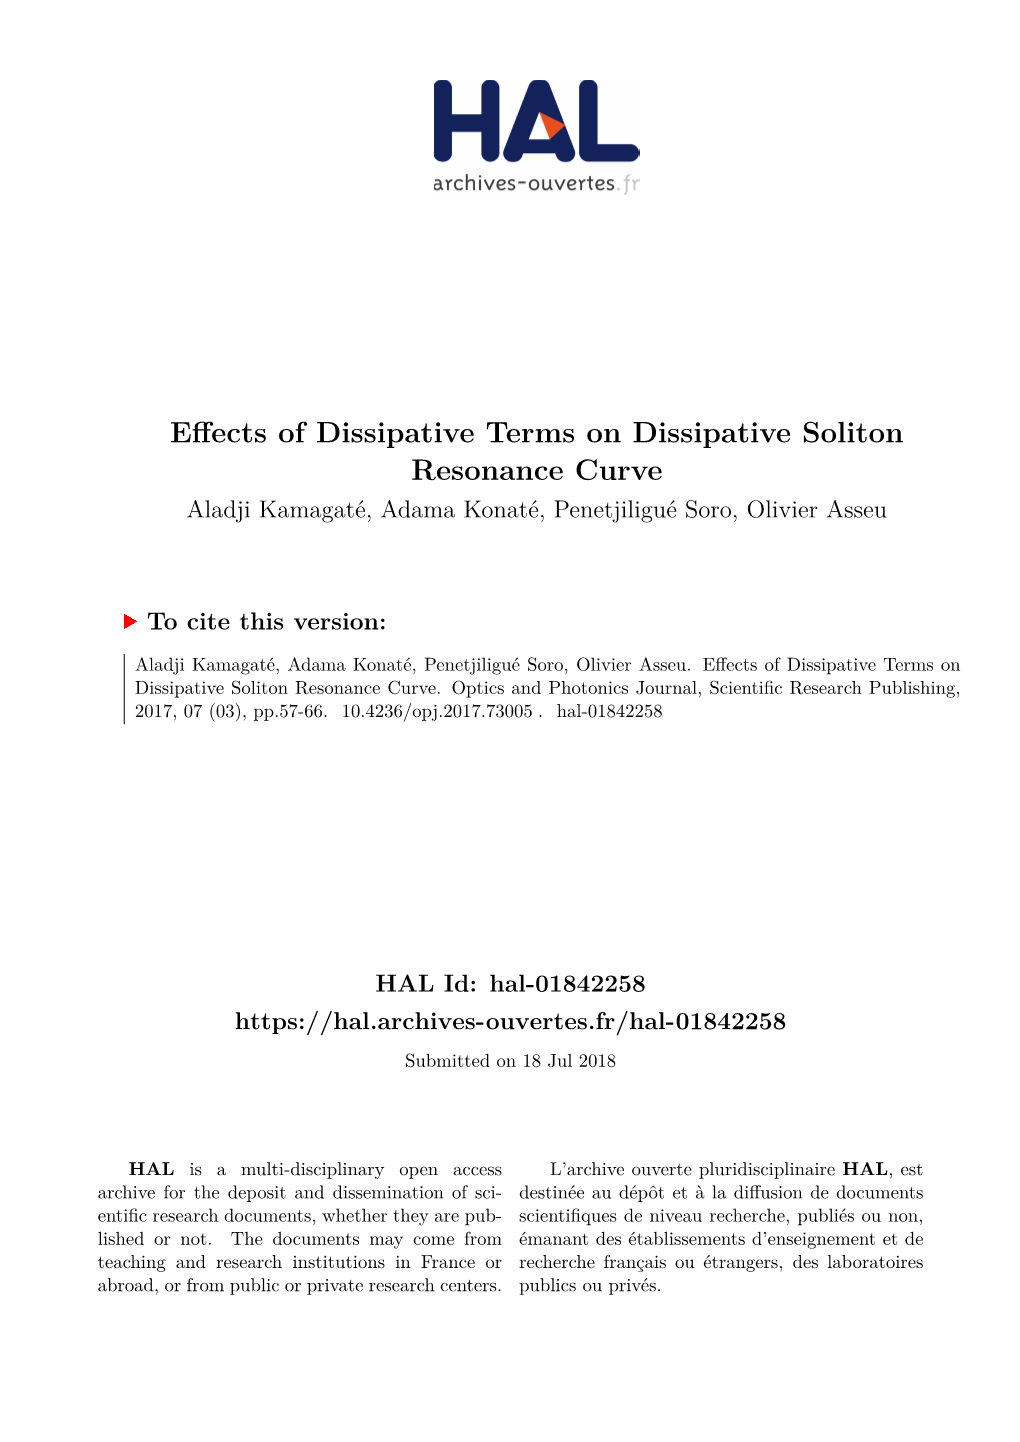 Effects of Dissipative Terms on Dissipative Soliton Resonance Curve Aladji Kamagaté, Adama Konaté, Penetjiligué Soro, Olivier Asseu